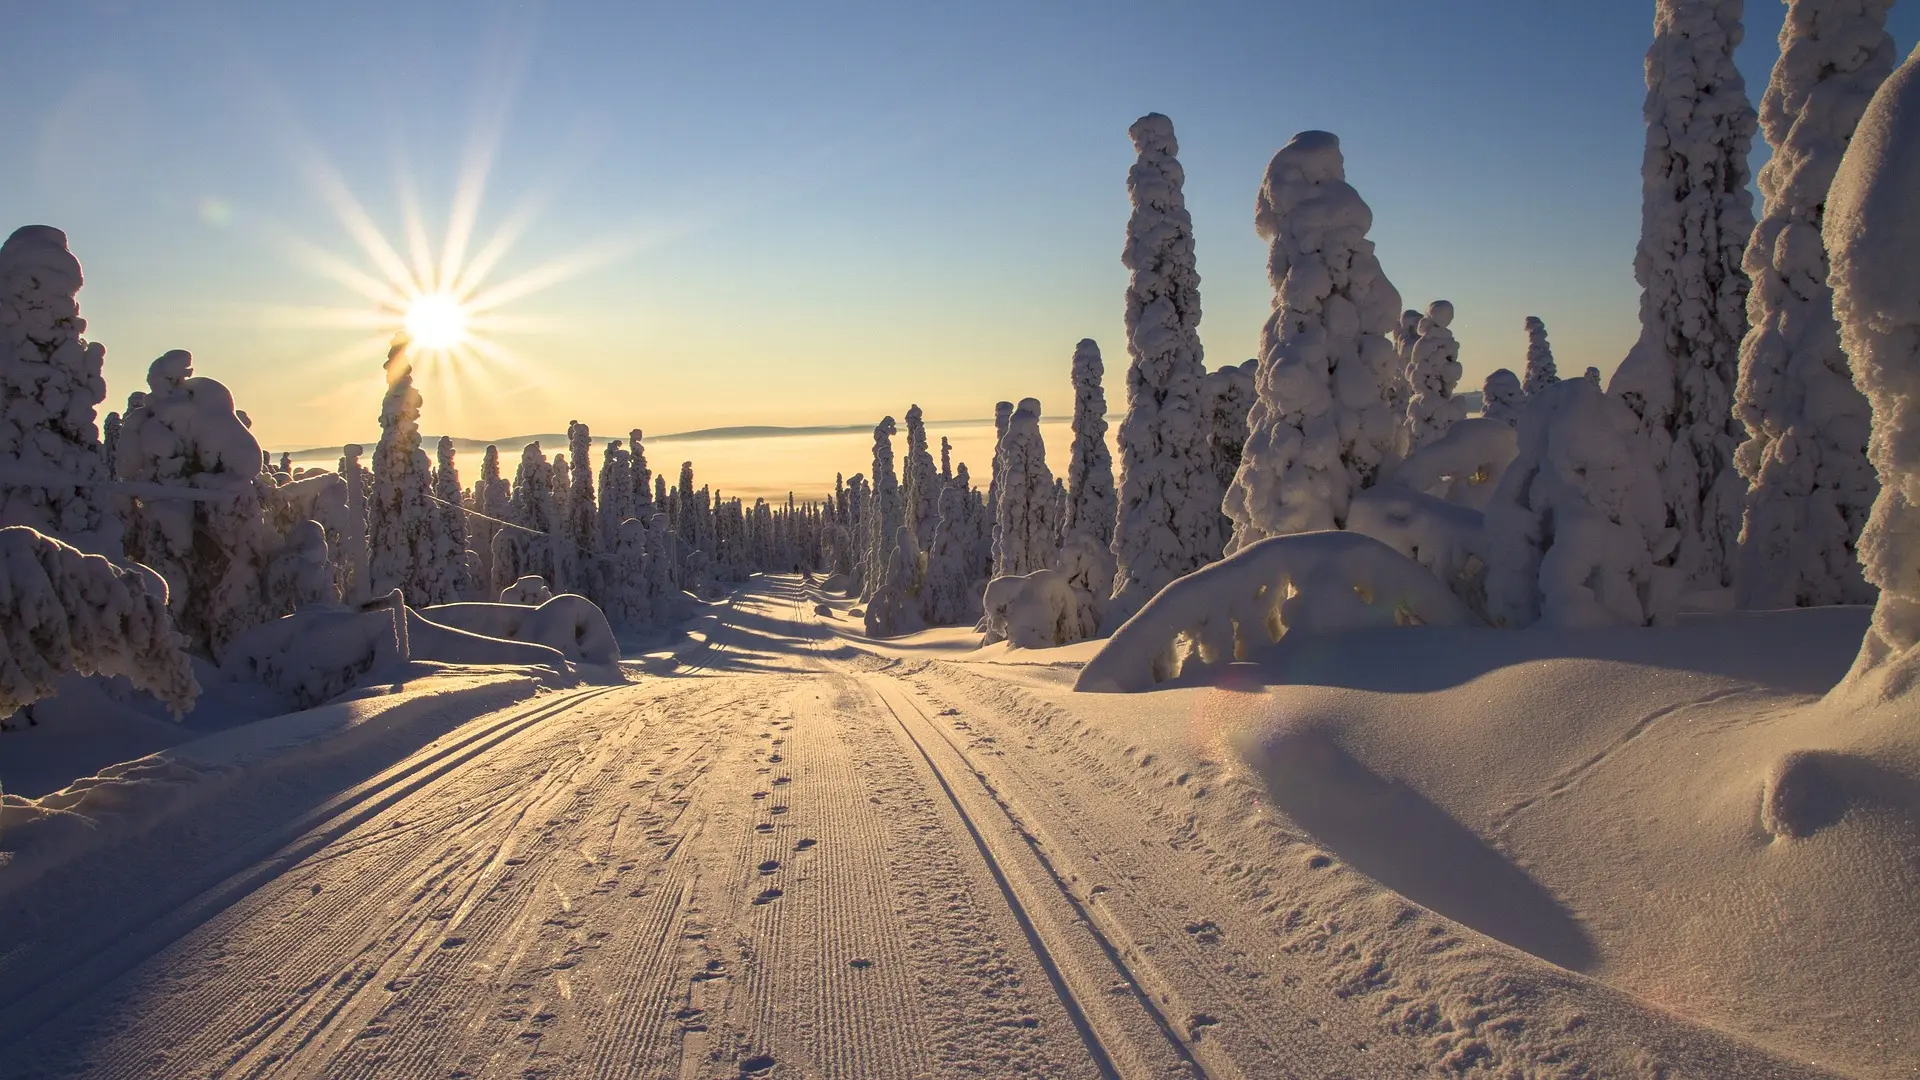 sunce, sneg, zima, topljenje snega, zubato sunce - pixabay-6567299fcfb90.webp